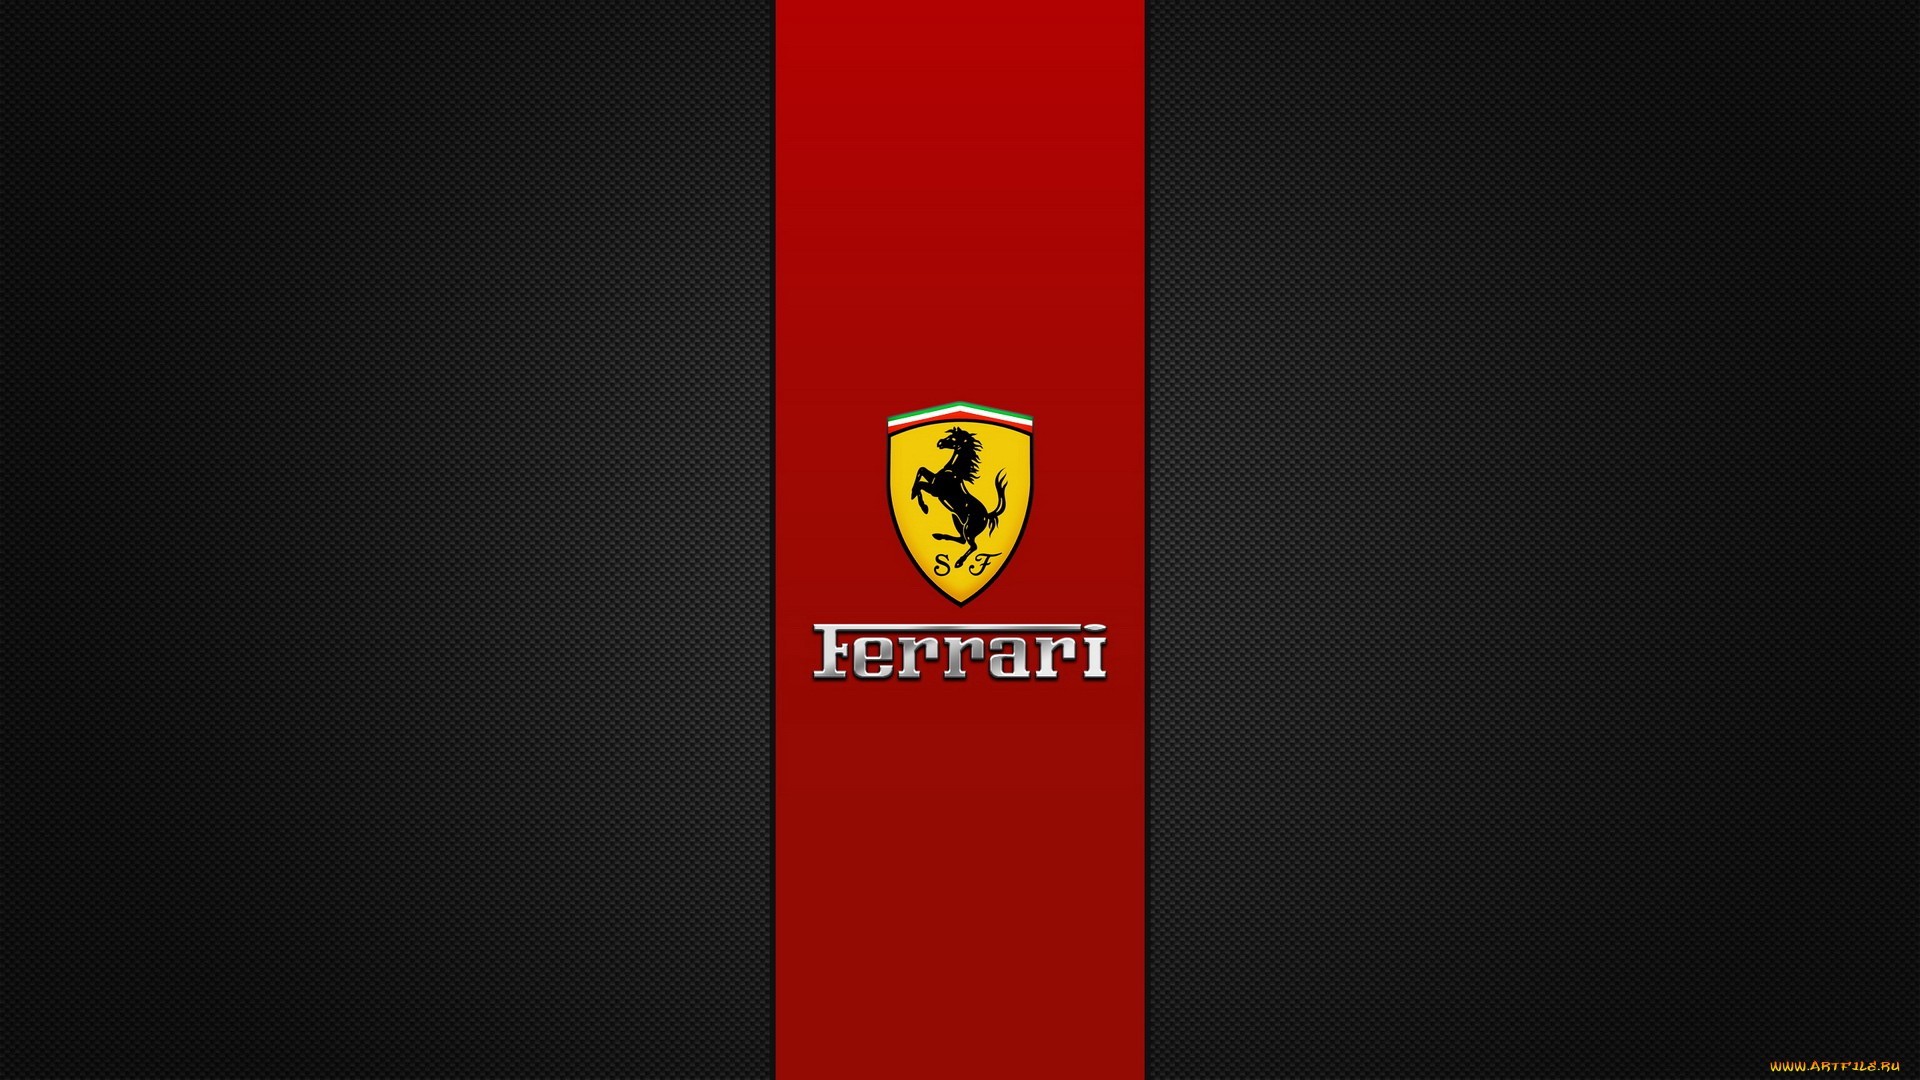 Free Stock Ferrari Photos